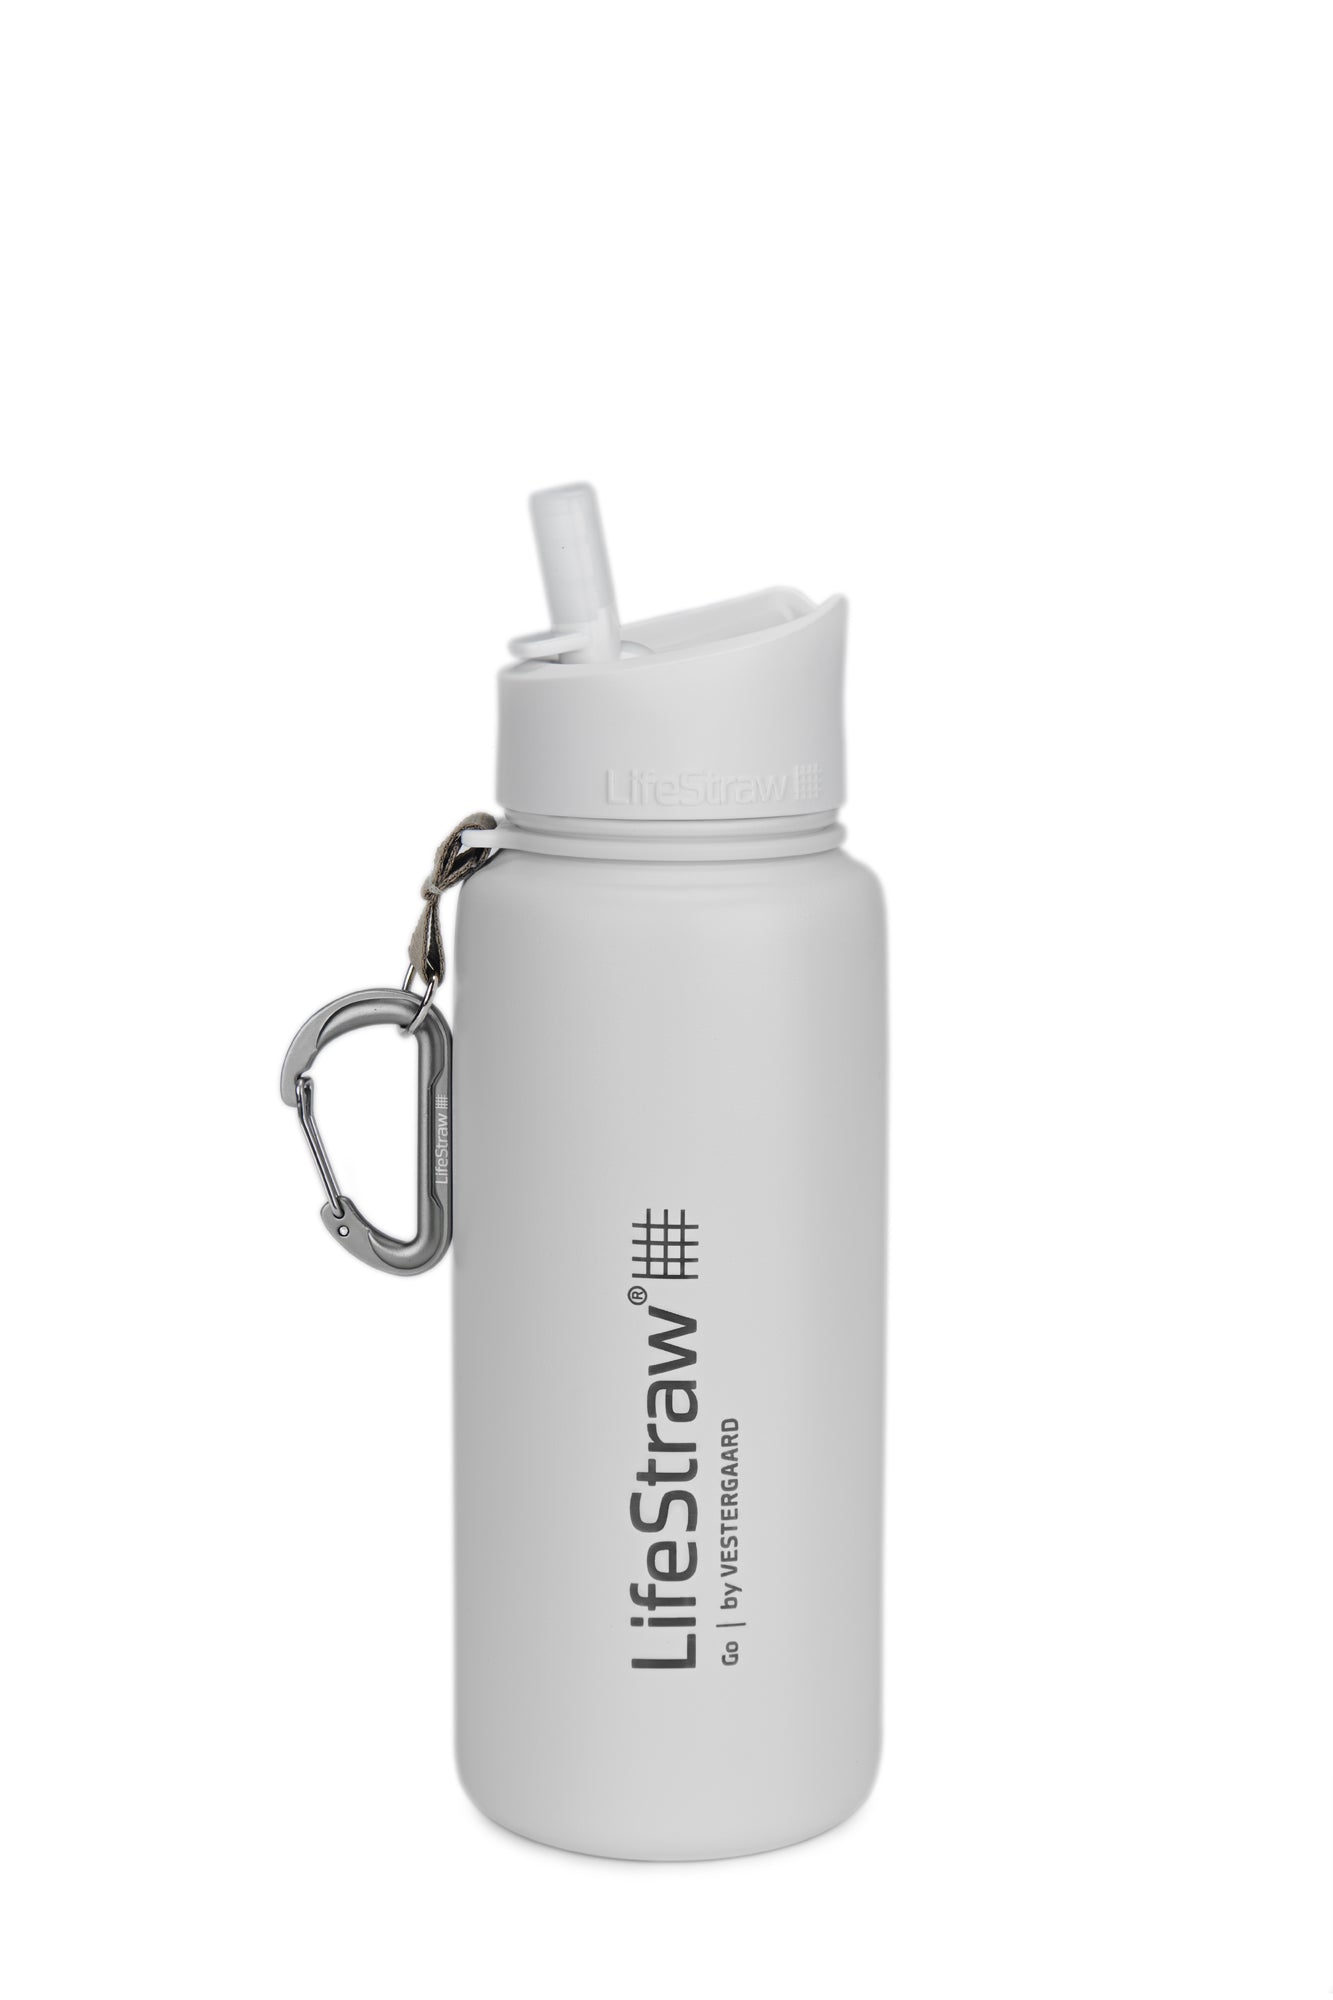 LifeStraw Go Stainless Steel (white)